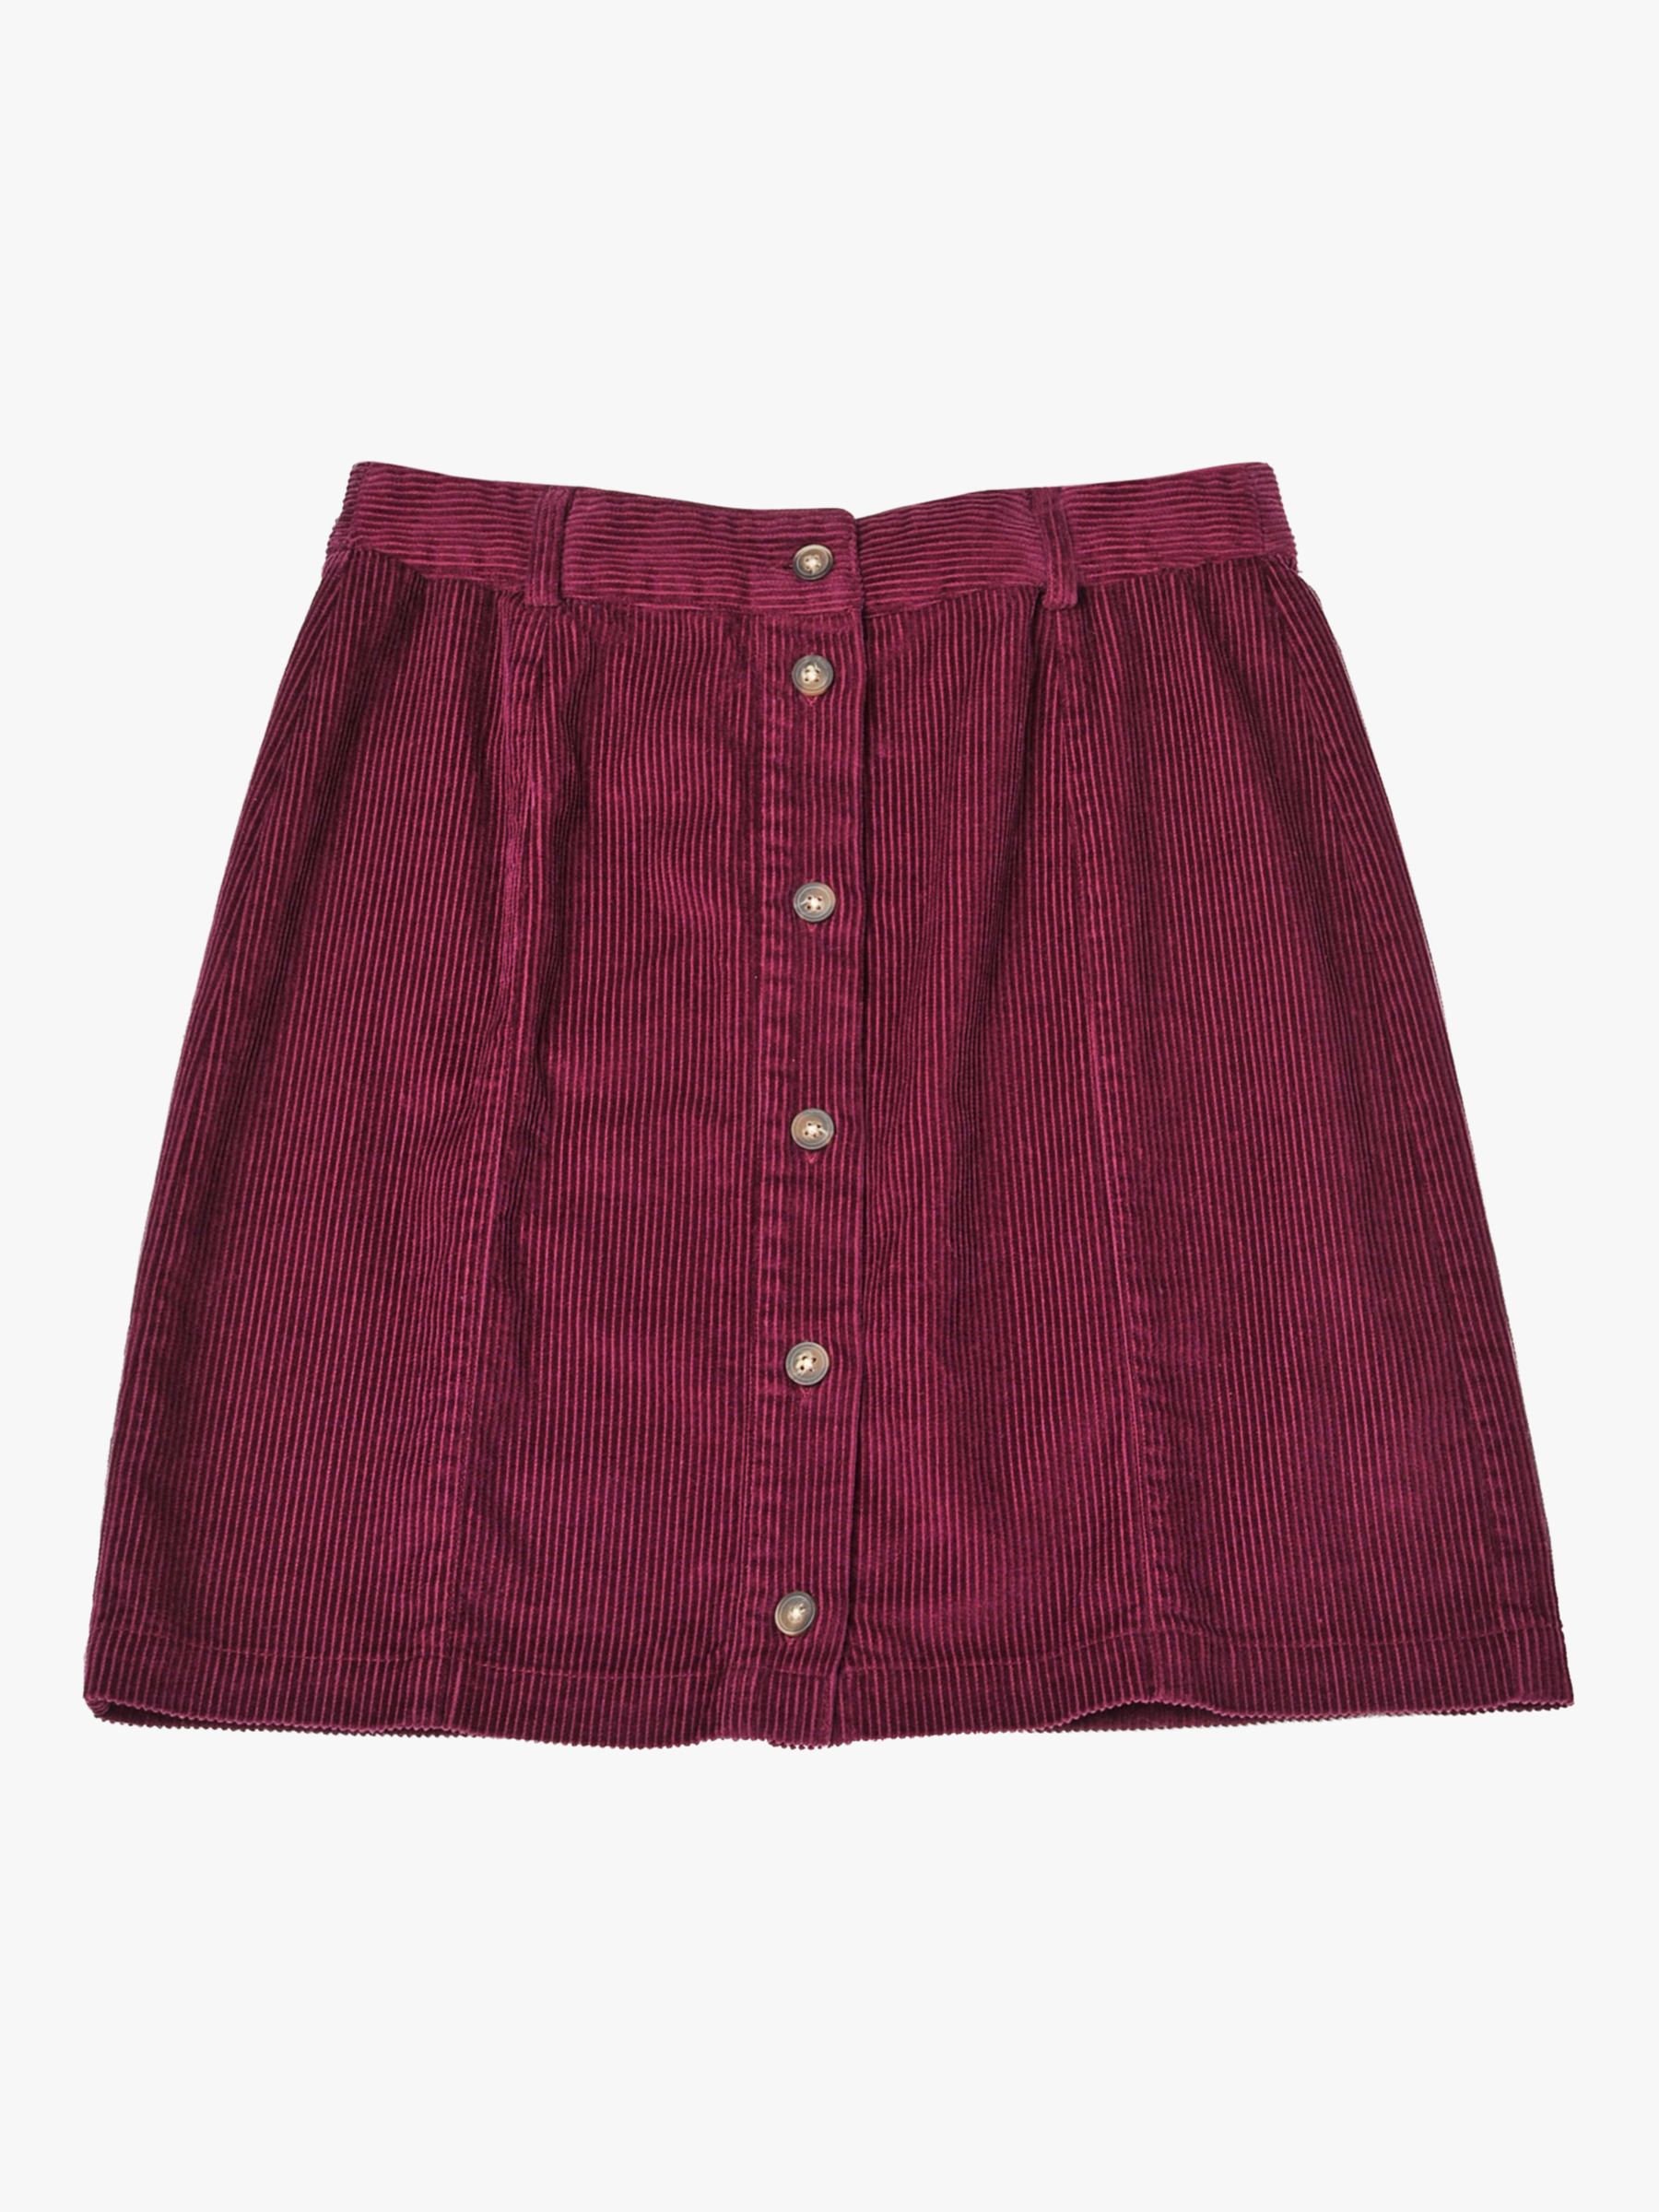 Burgs Penberth Corduroy Skirt, Plum Pink